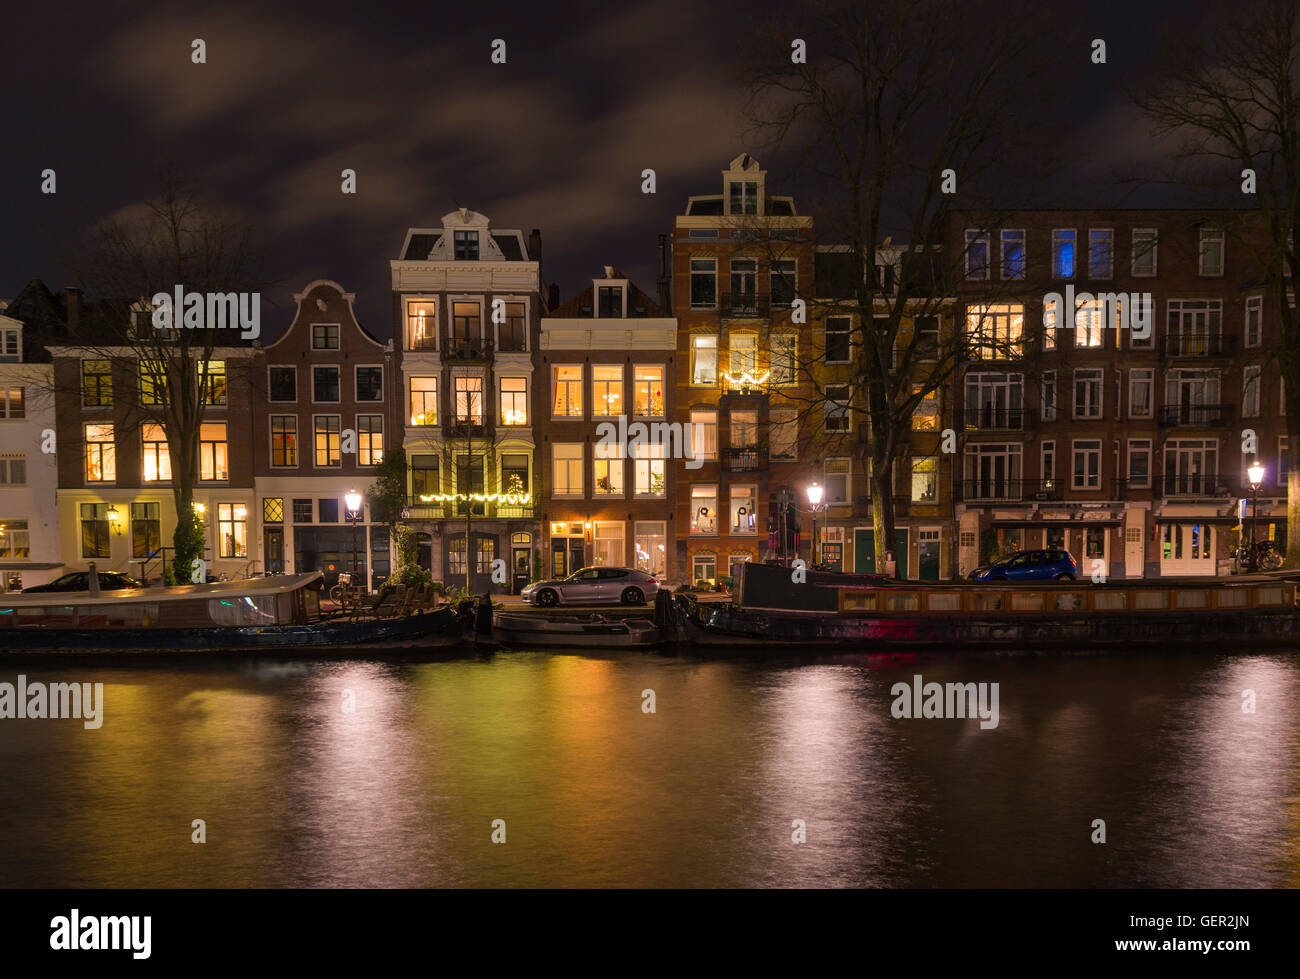 Vista notturna di alcune tradizionali case a capanna lungo un canale di amsterdam Foto Stock